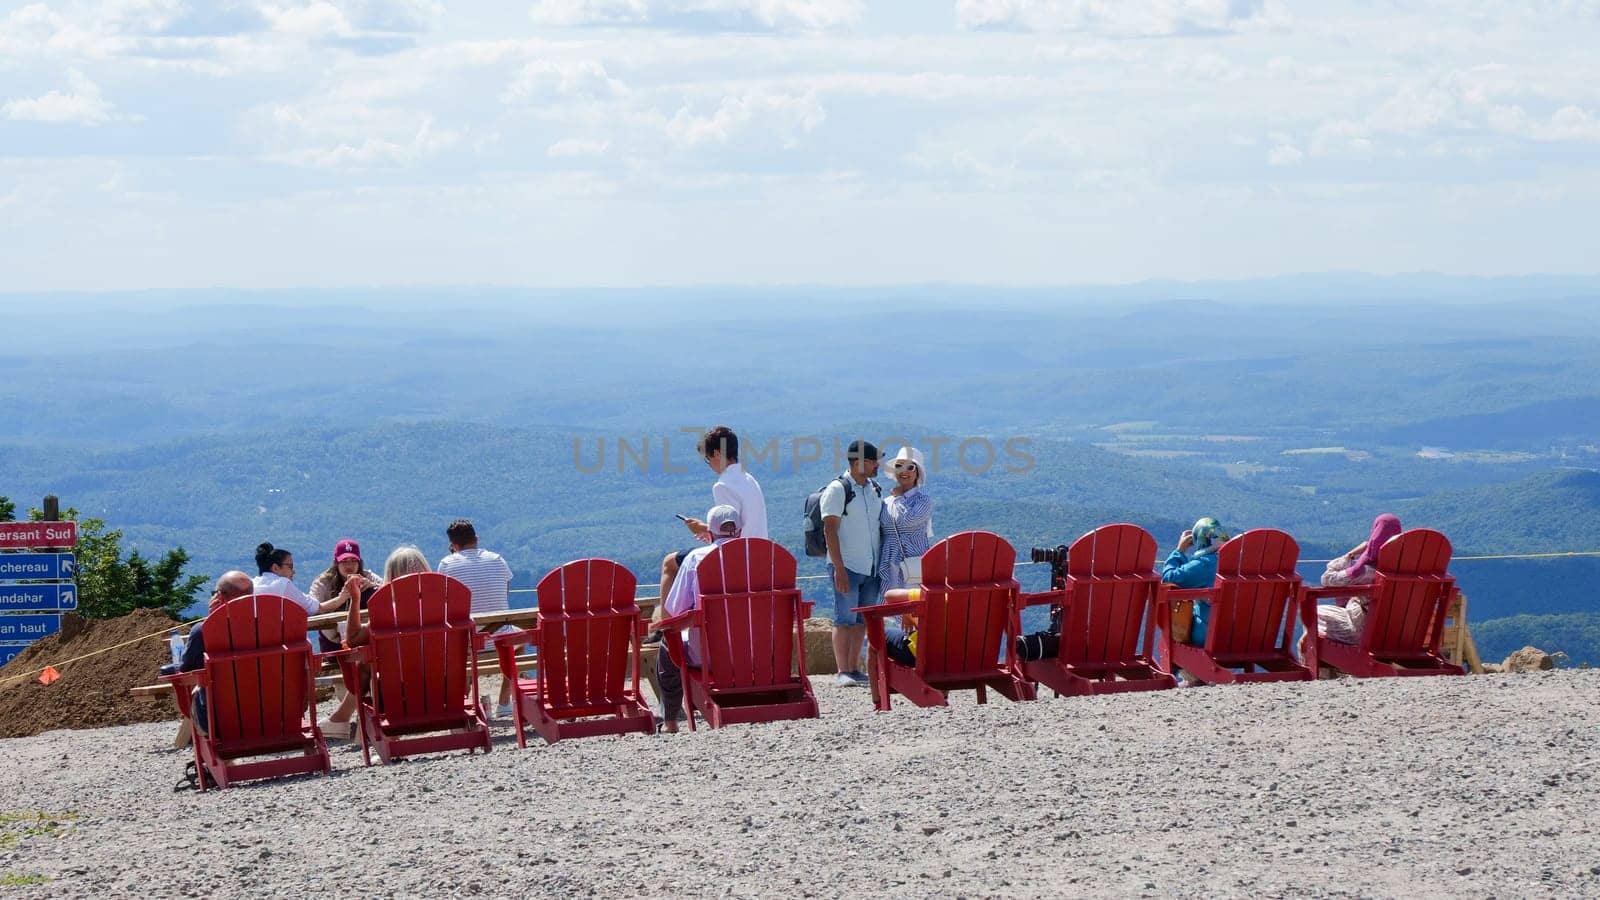 Sightseeing mountain views at Mont Tremblant ski Resort in summer. Tourists enjoying sitting at red chairs at ski resort village. Mont-Tremblant, Quebec, Canada - 22.09.2022 by JuliaDorian